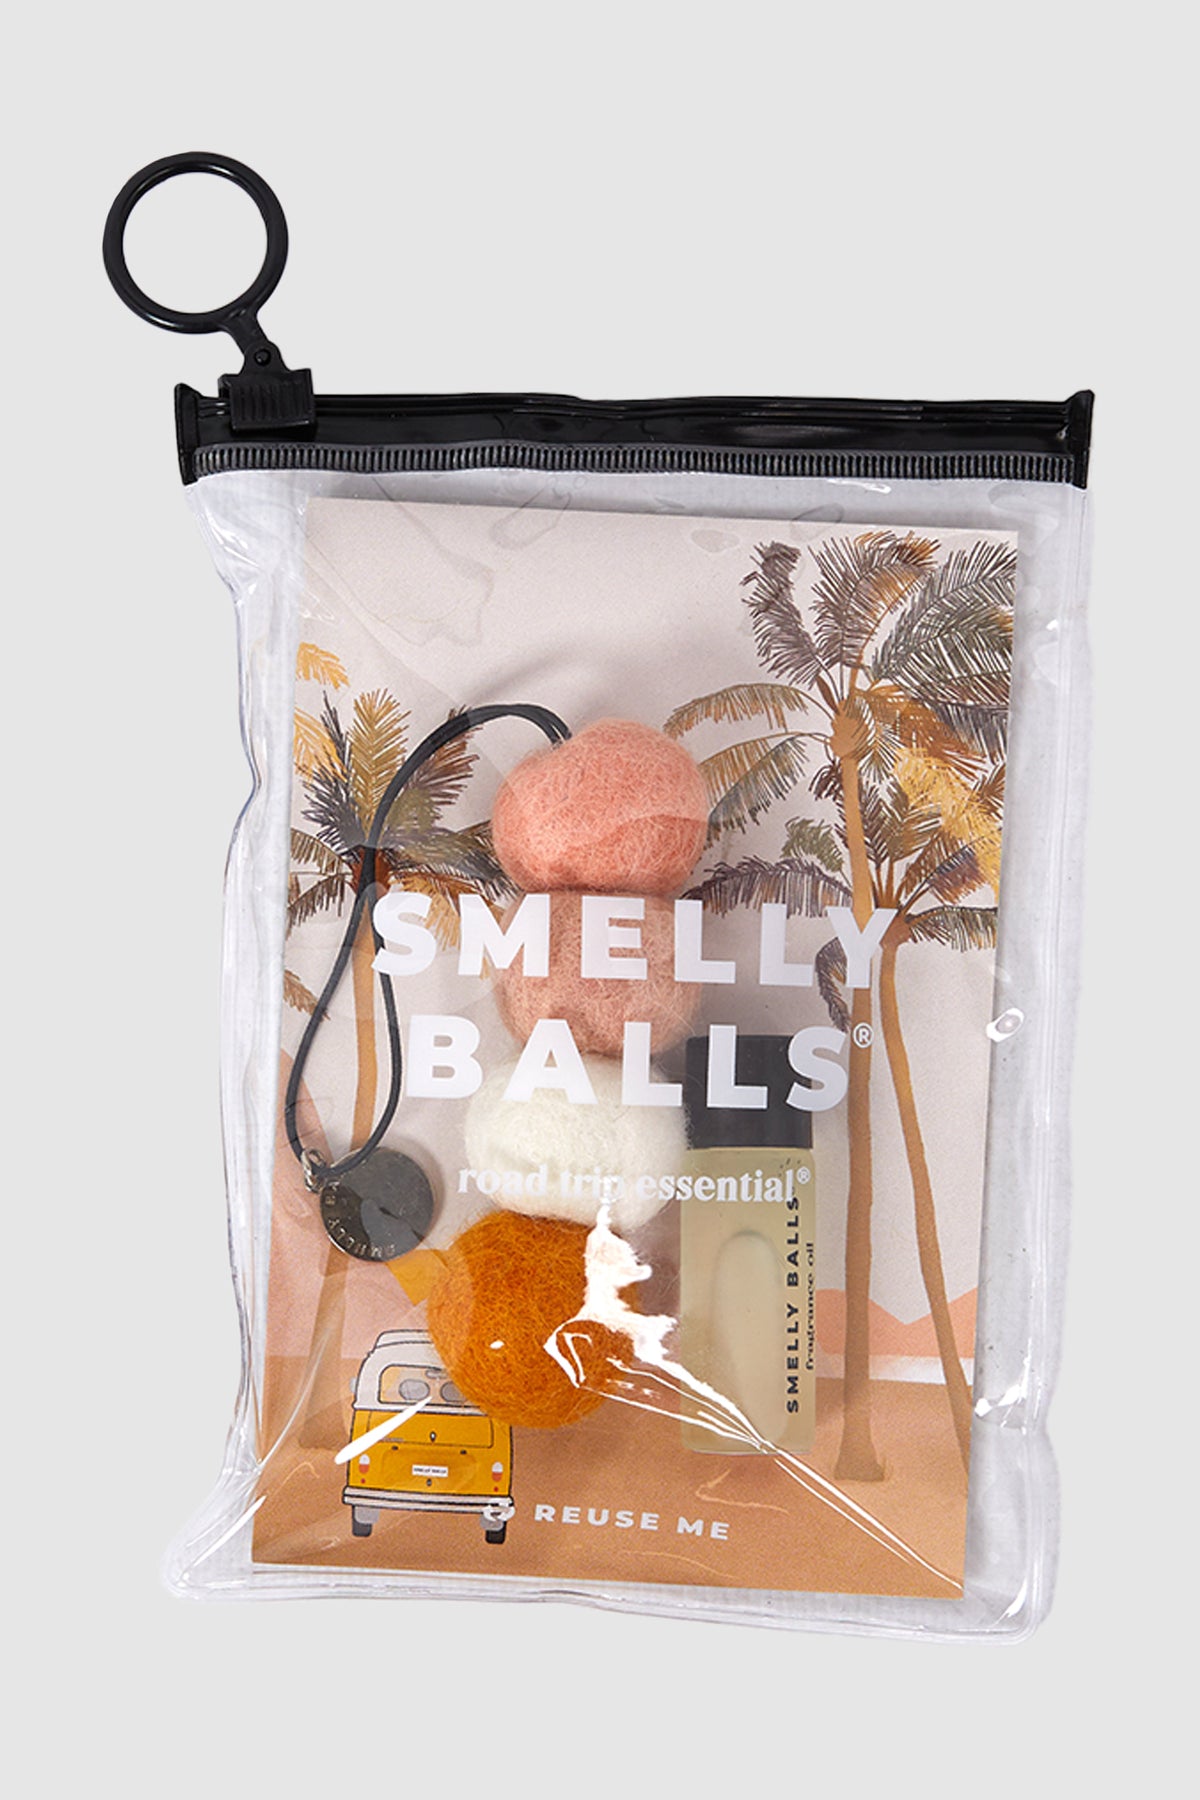 Smelly Balls Honeysuckle